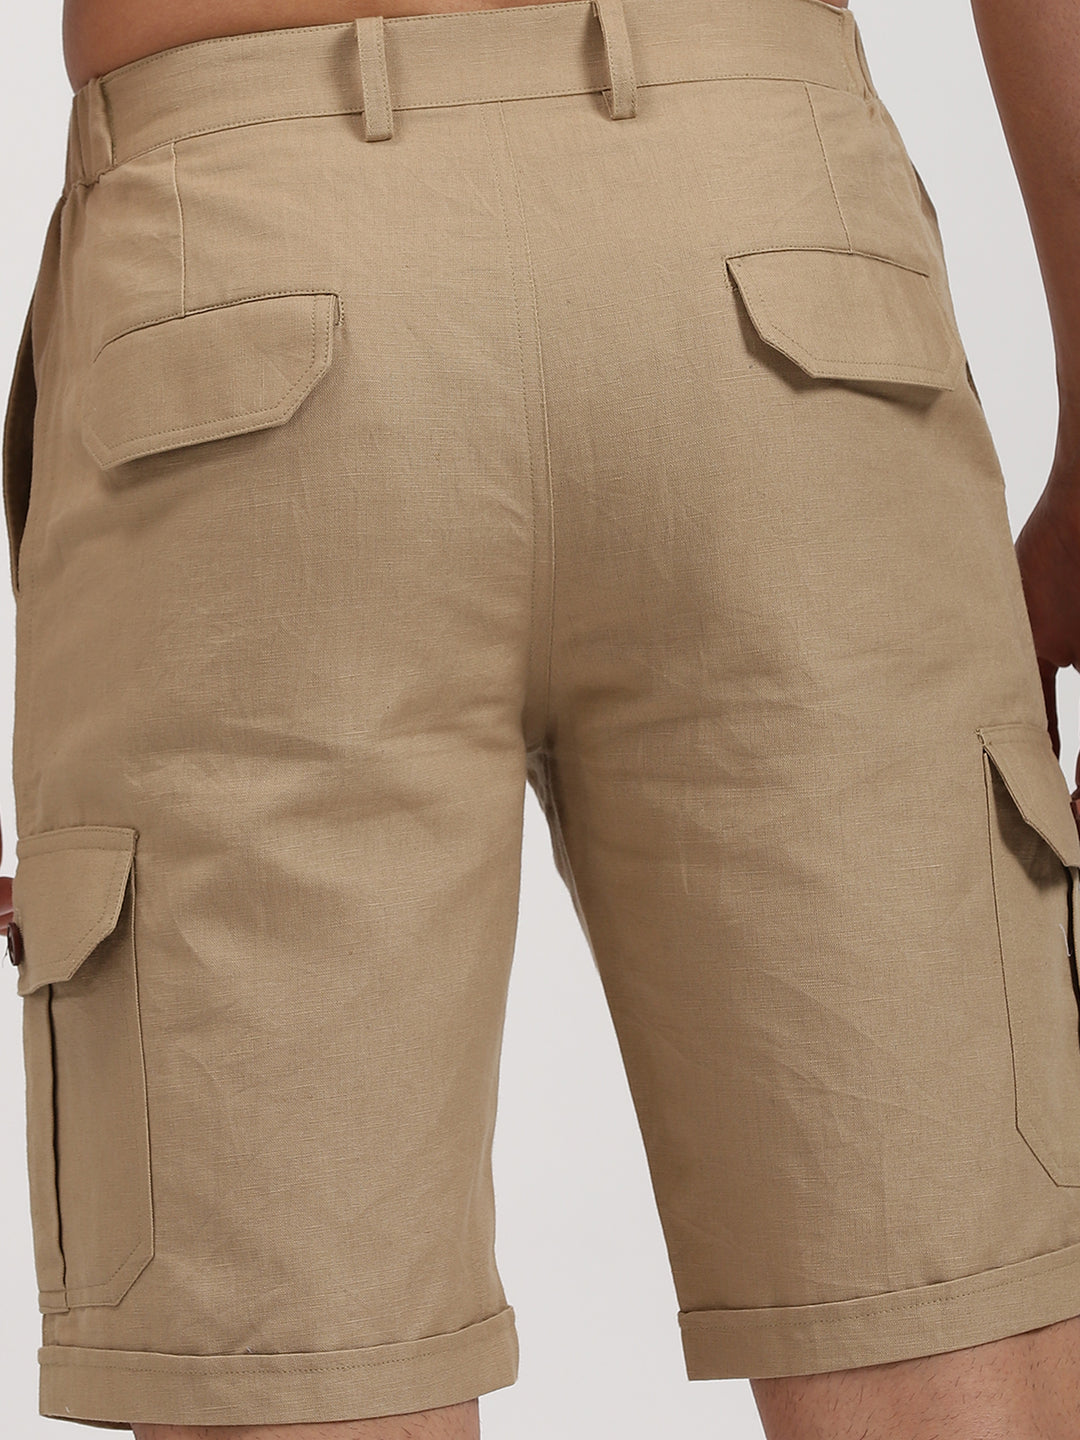 Reed - Linen Shorts - Khaki